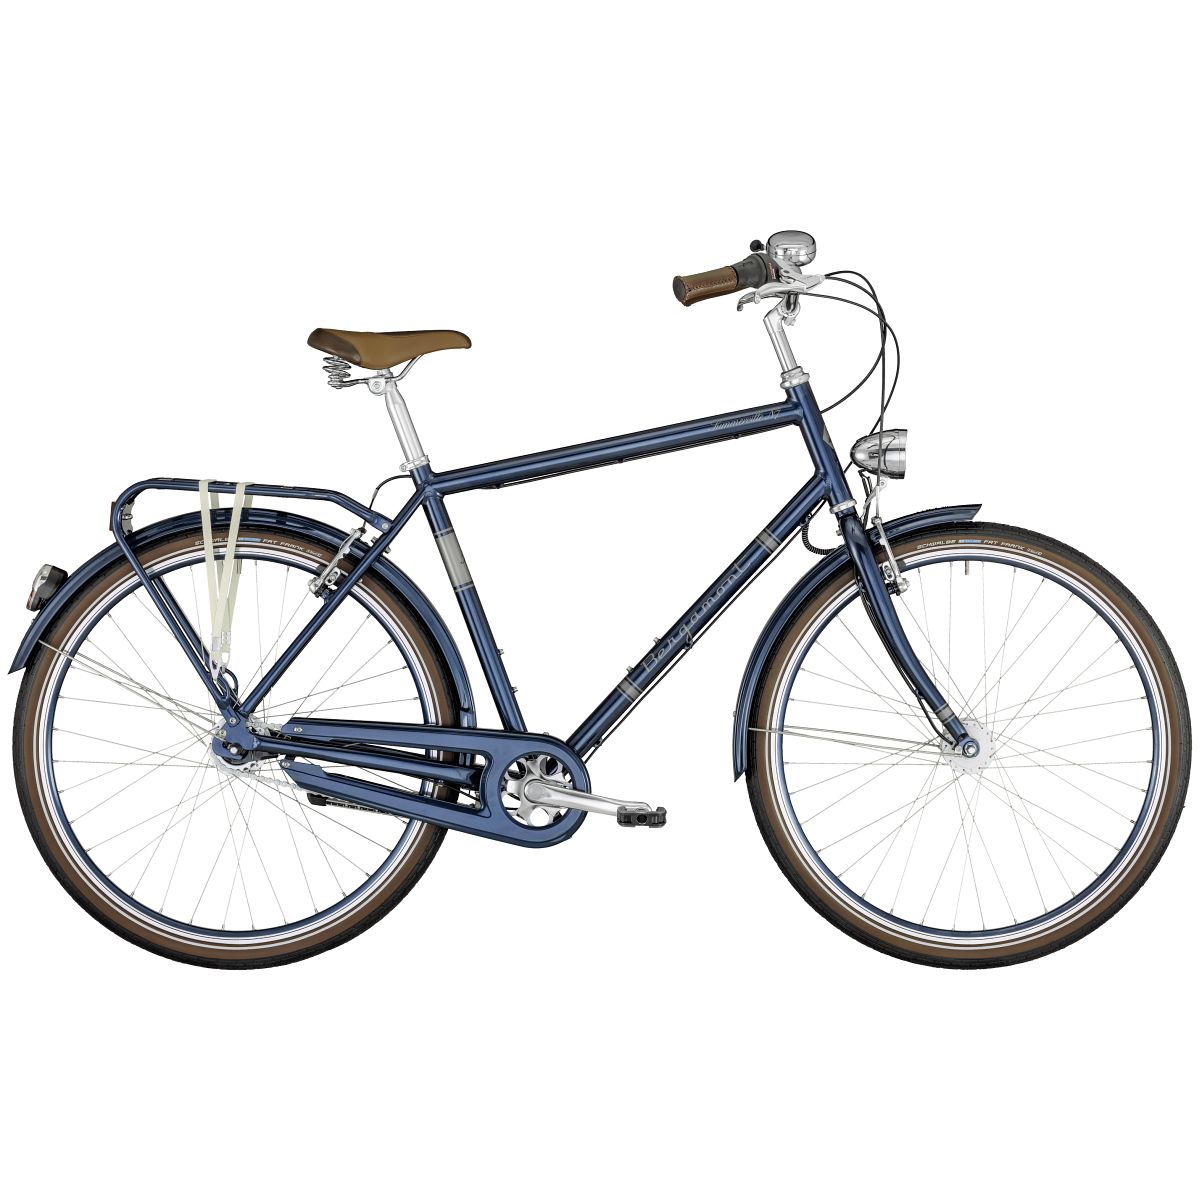 Bergamont Summerville N7 FH Retro City Fahrrad blau 2021